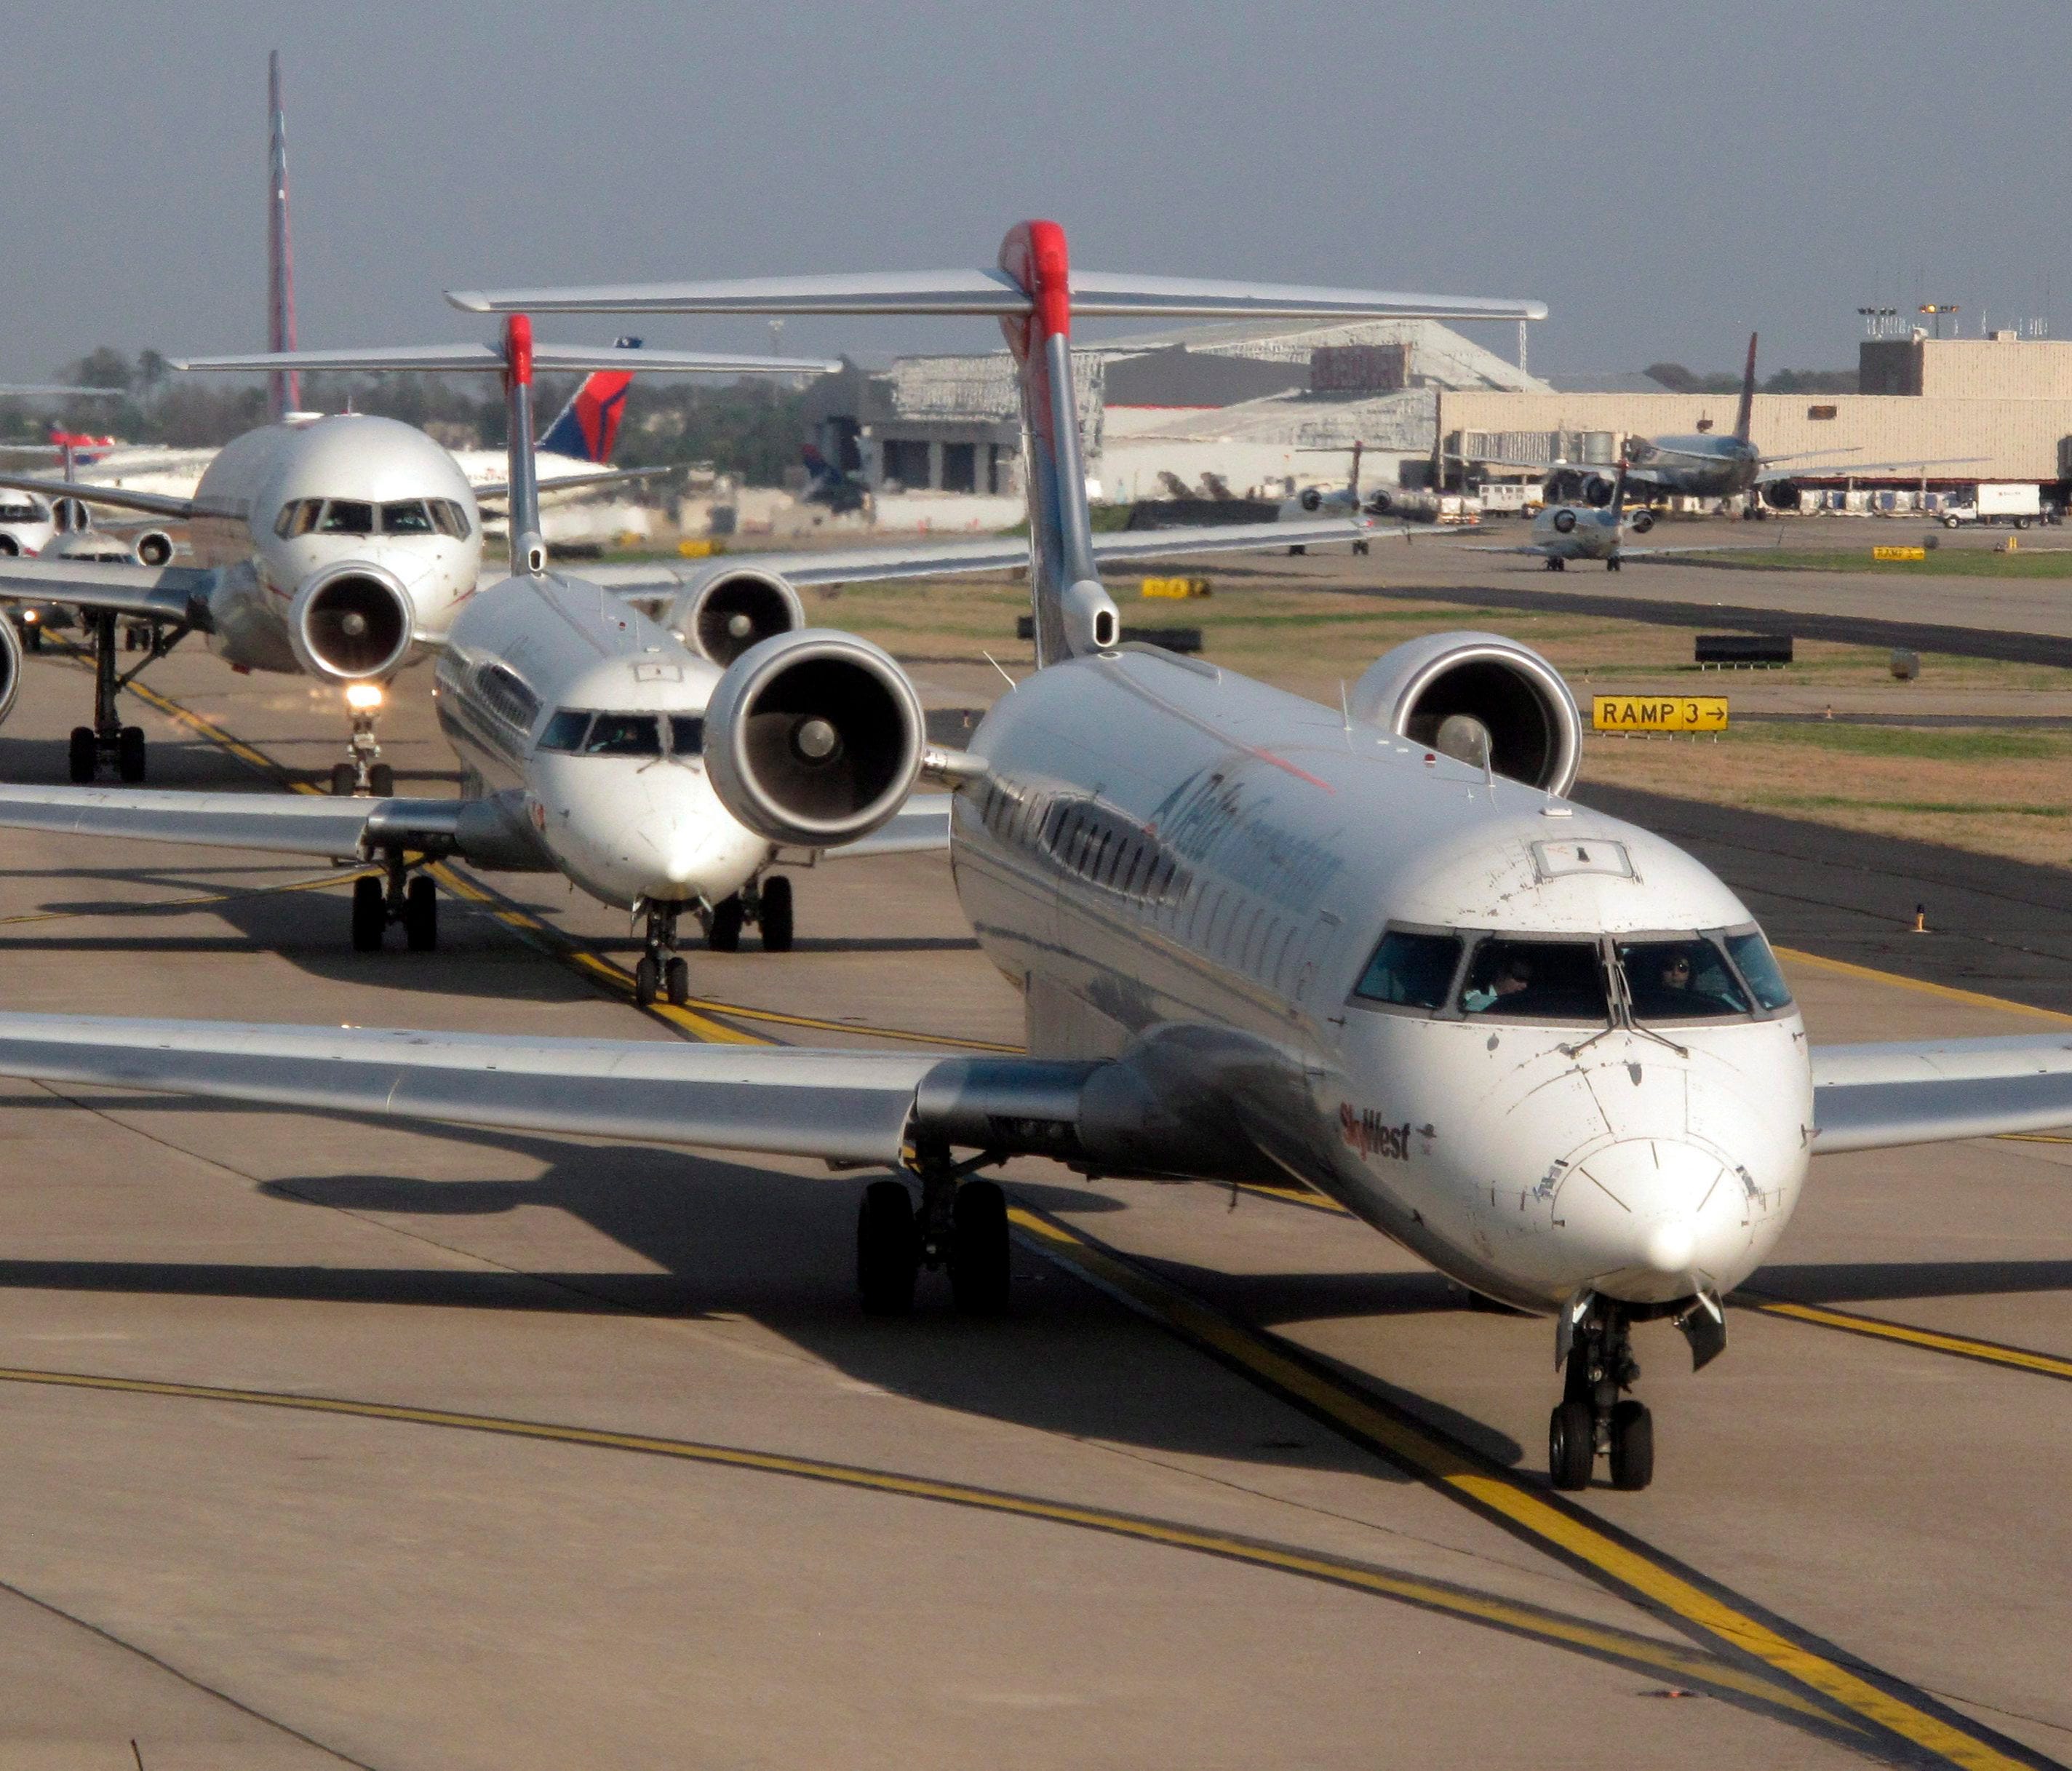 Delta planes line up for takeoff at Atlanta Hartsfield-Jackson International Airport.